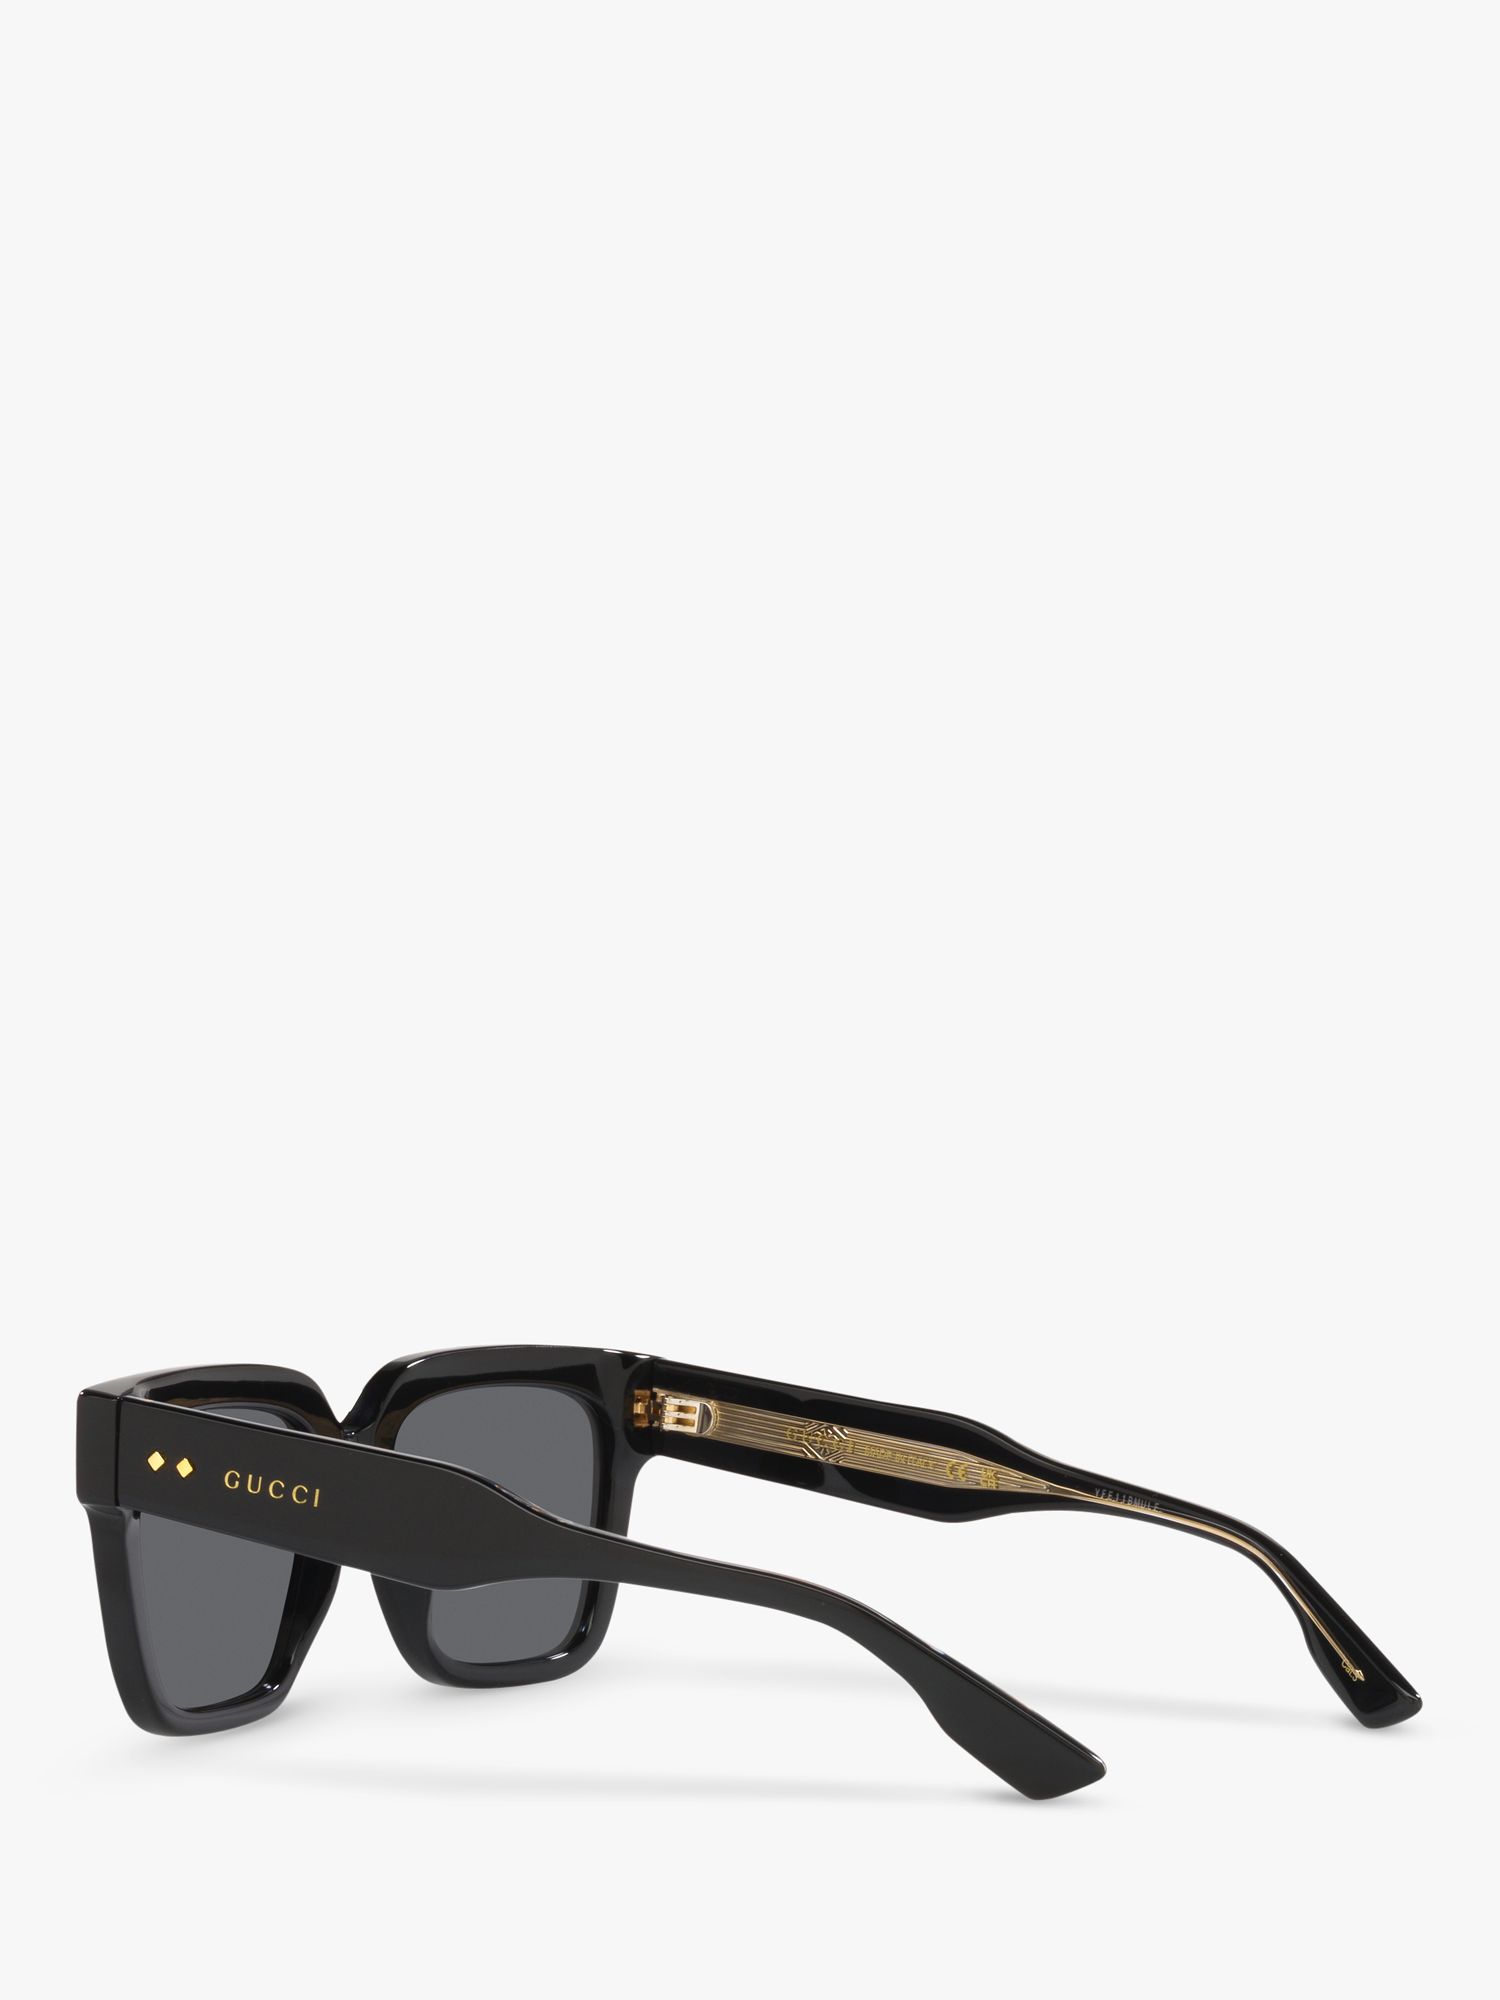 Gucci GG1084S Unisex Rectangular Sunglasses, Black/Grey at John Lewis ...